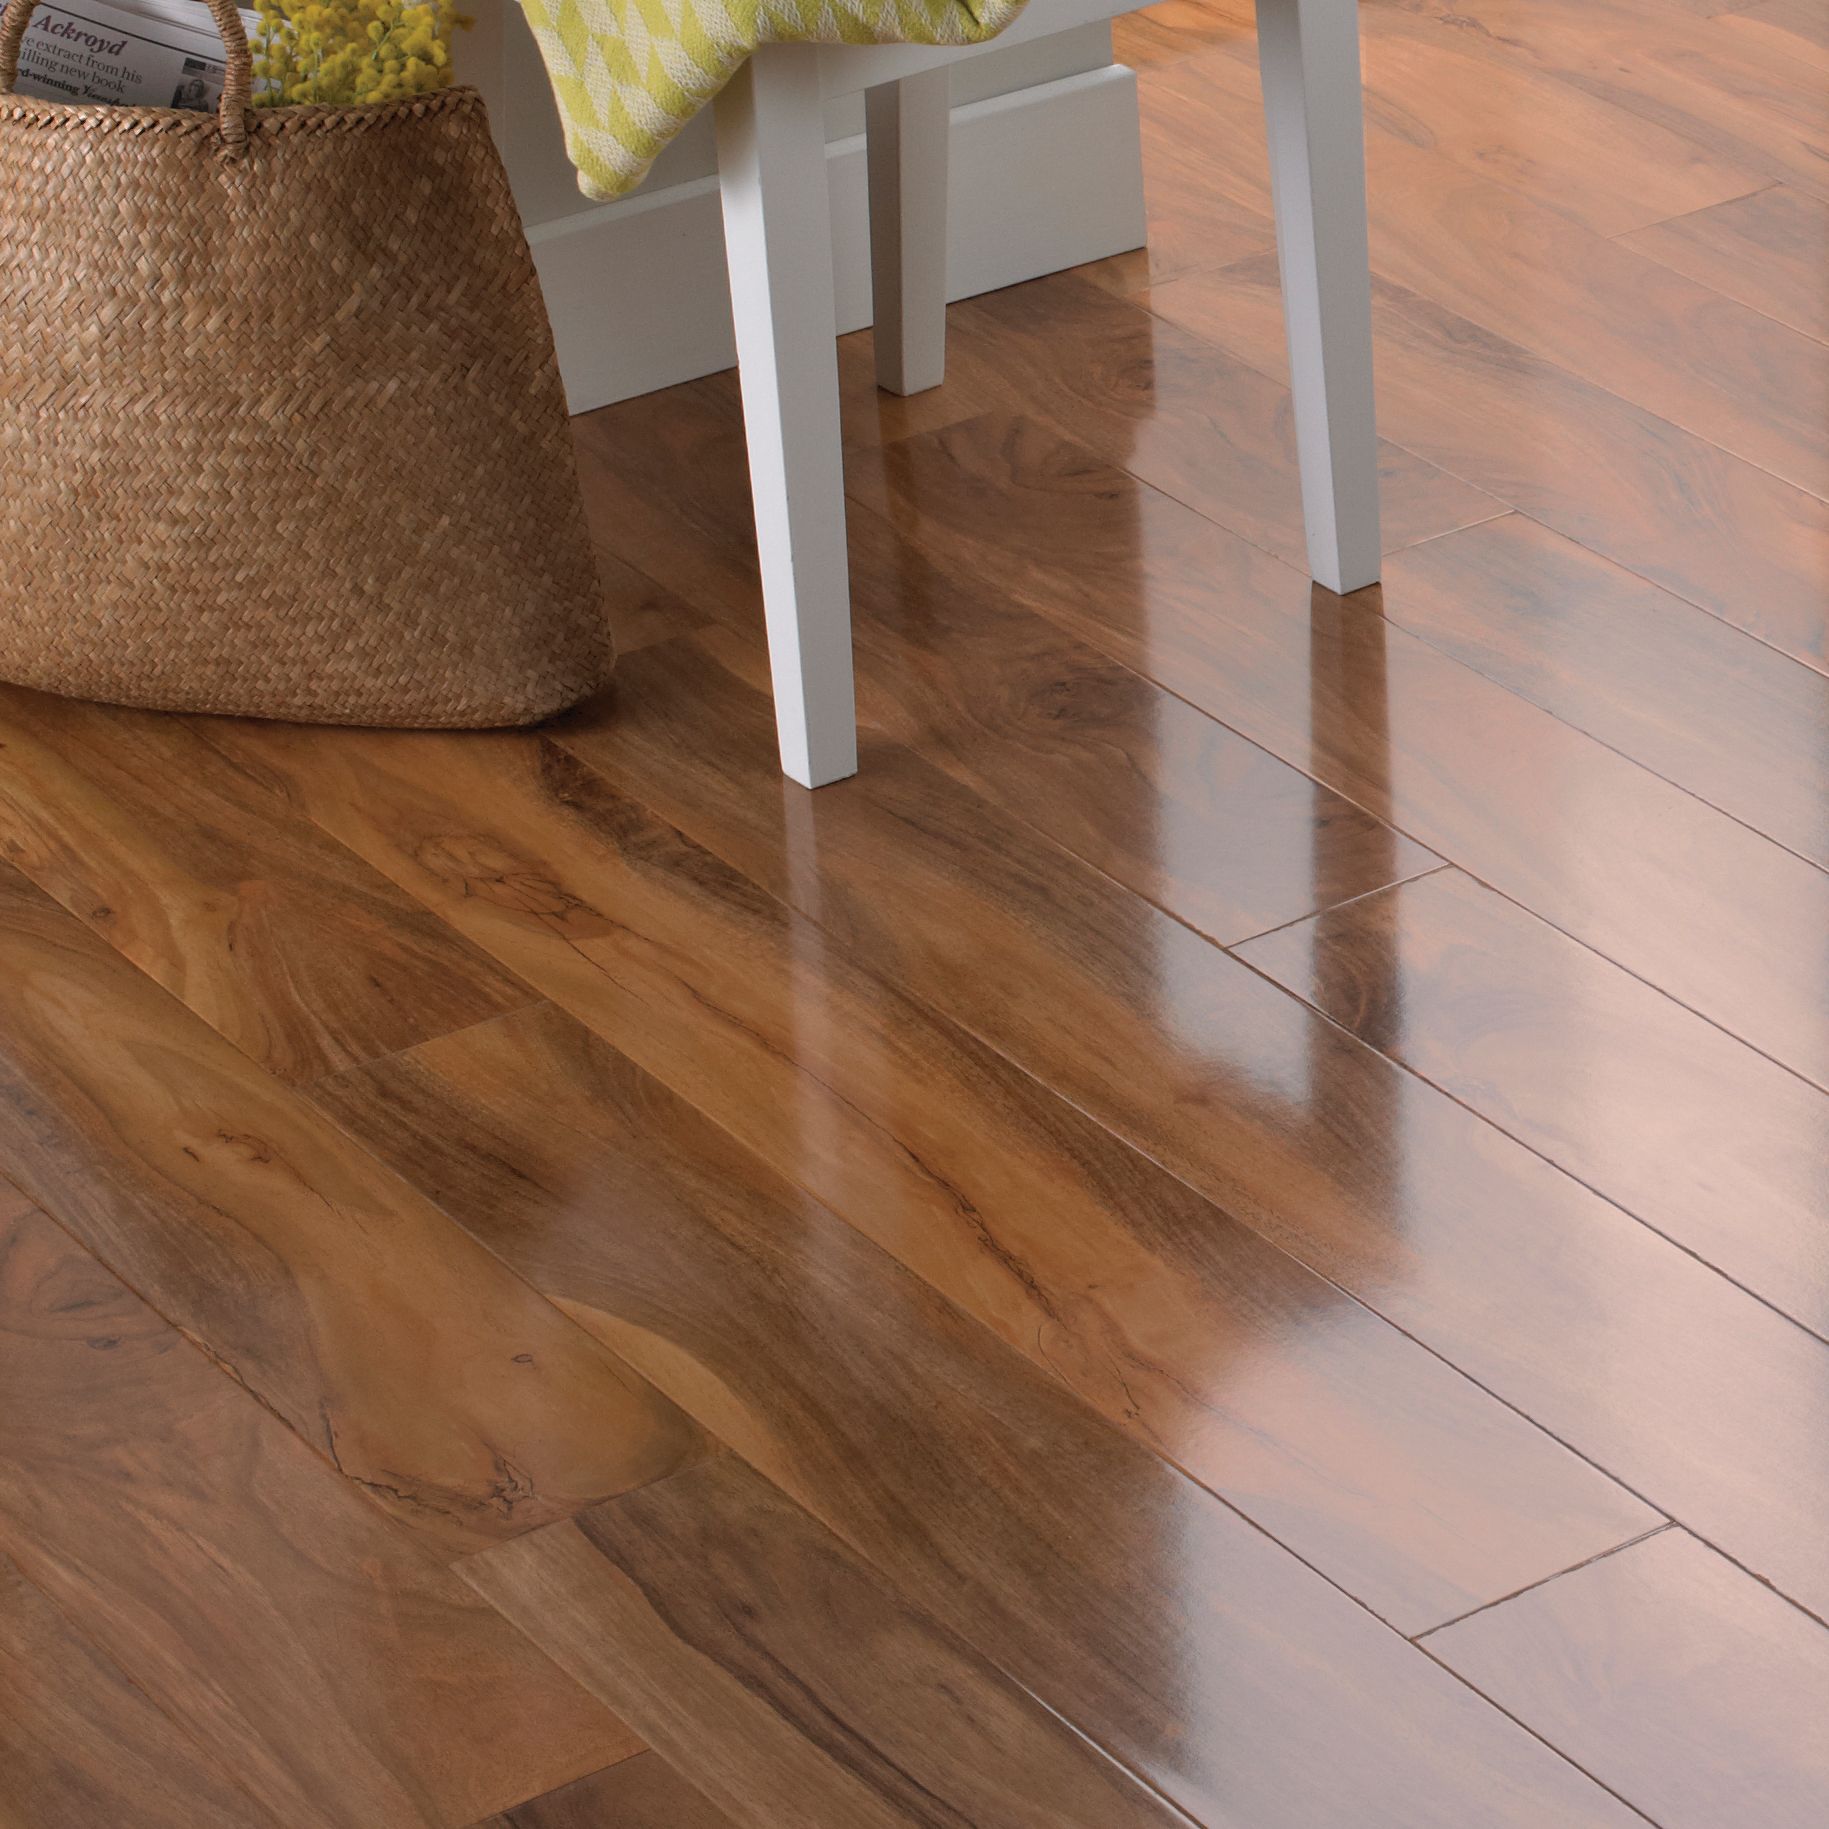 Glossy Varnished - 8mm High Gloss Laminate Flooring - Grey Wood